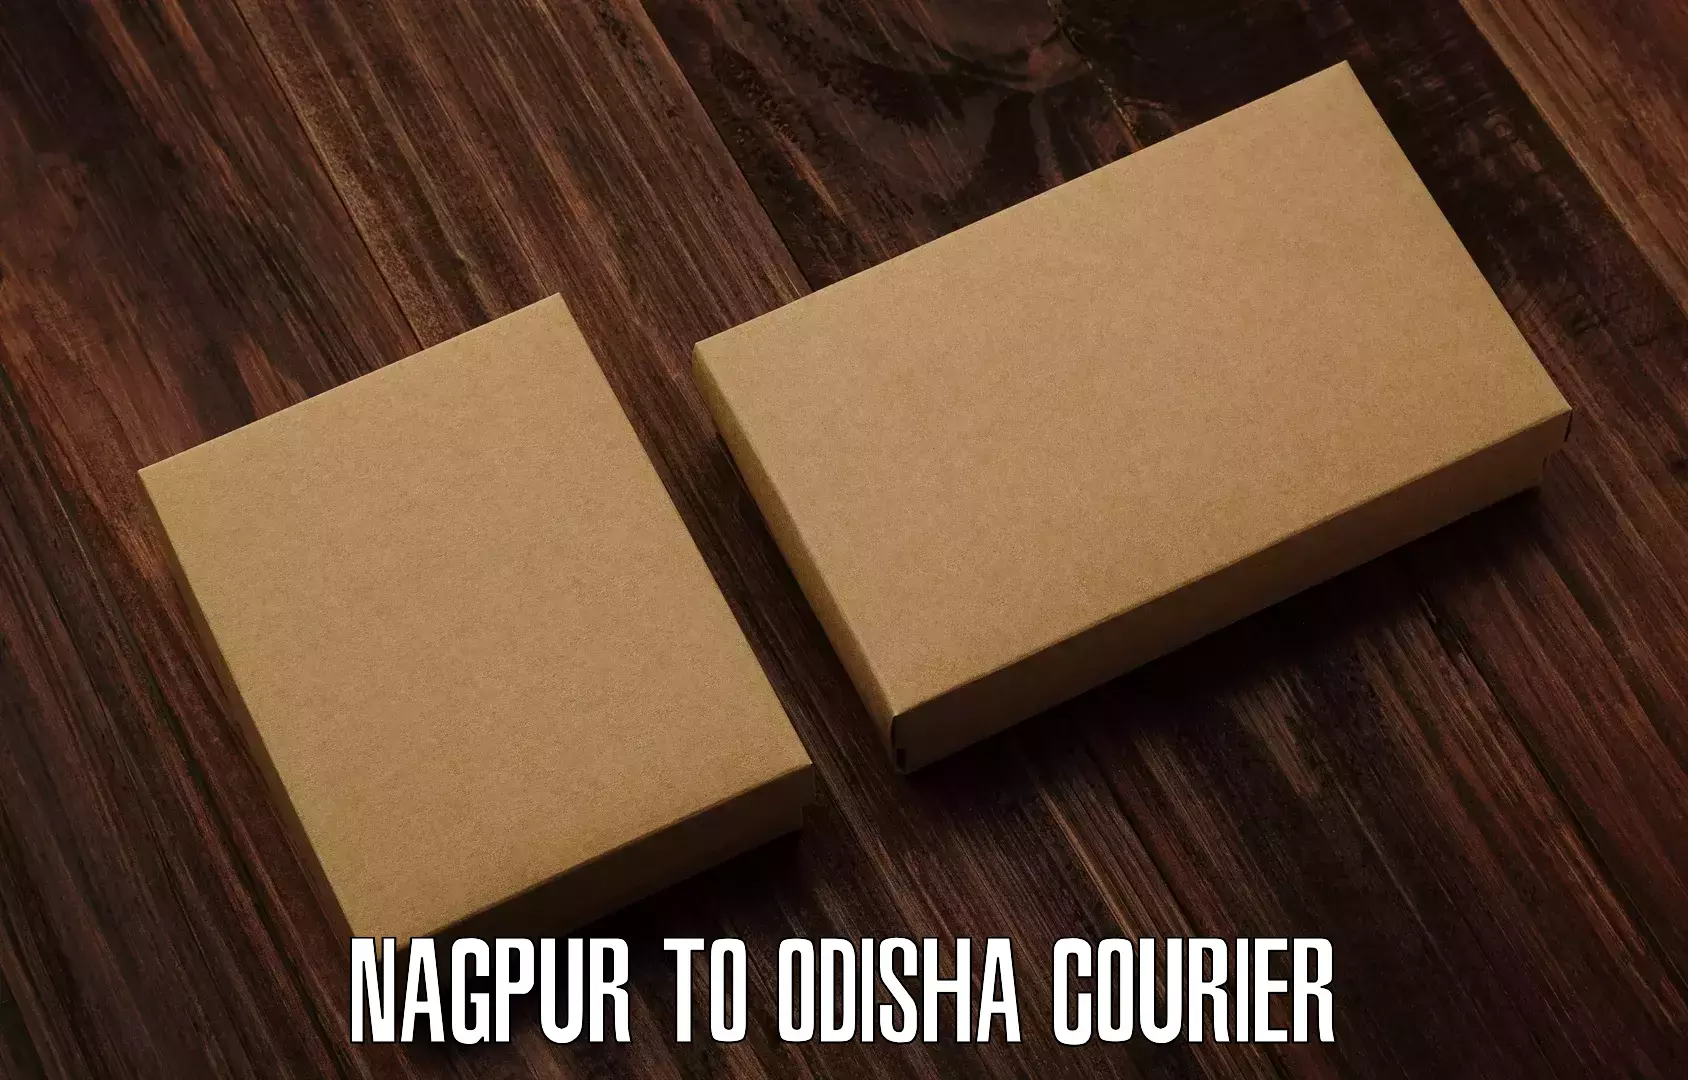 Cash on delivery service Nagpur to Odisha